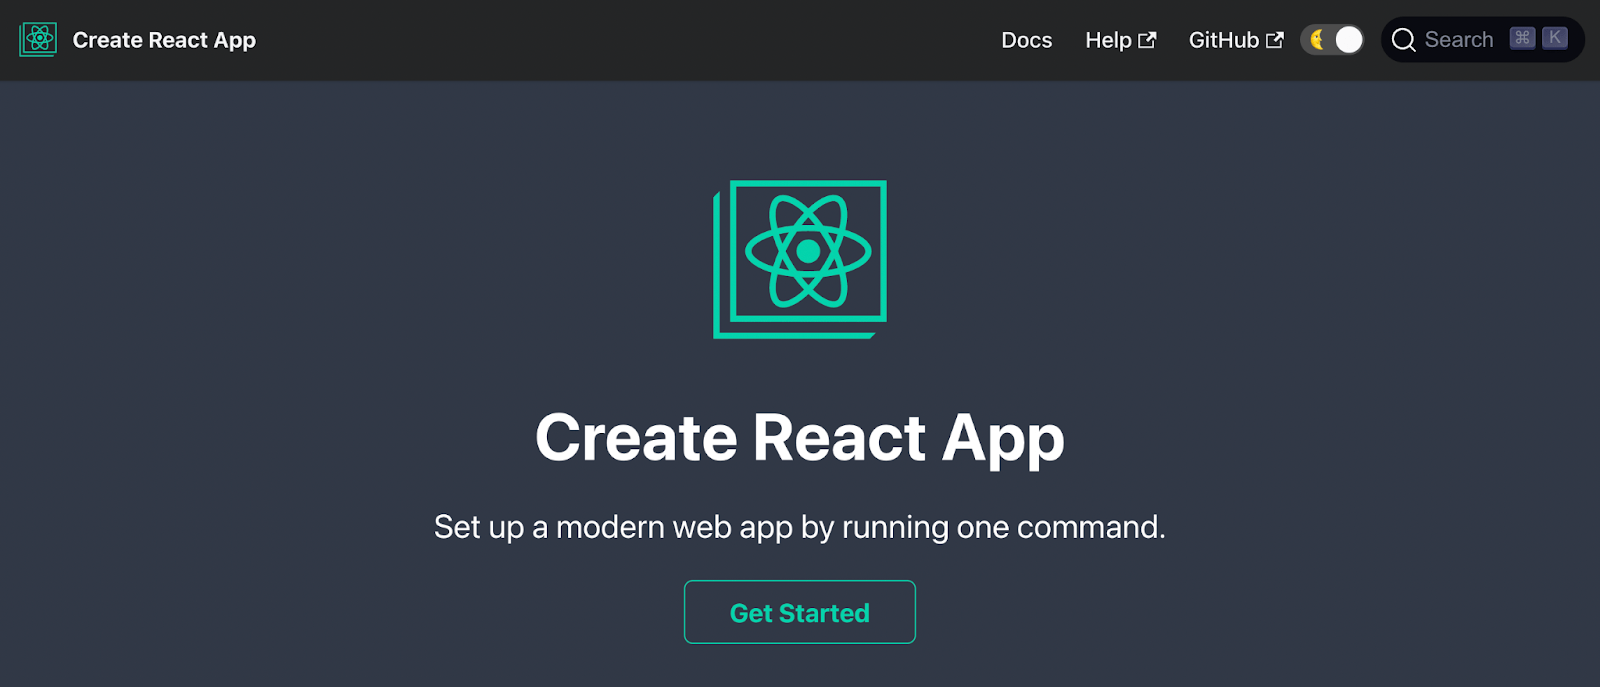 GitHub "Create React App" landing page